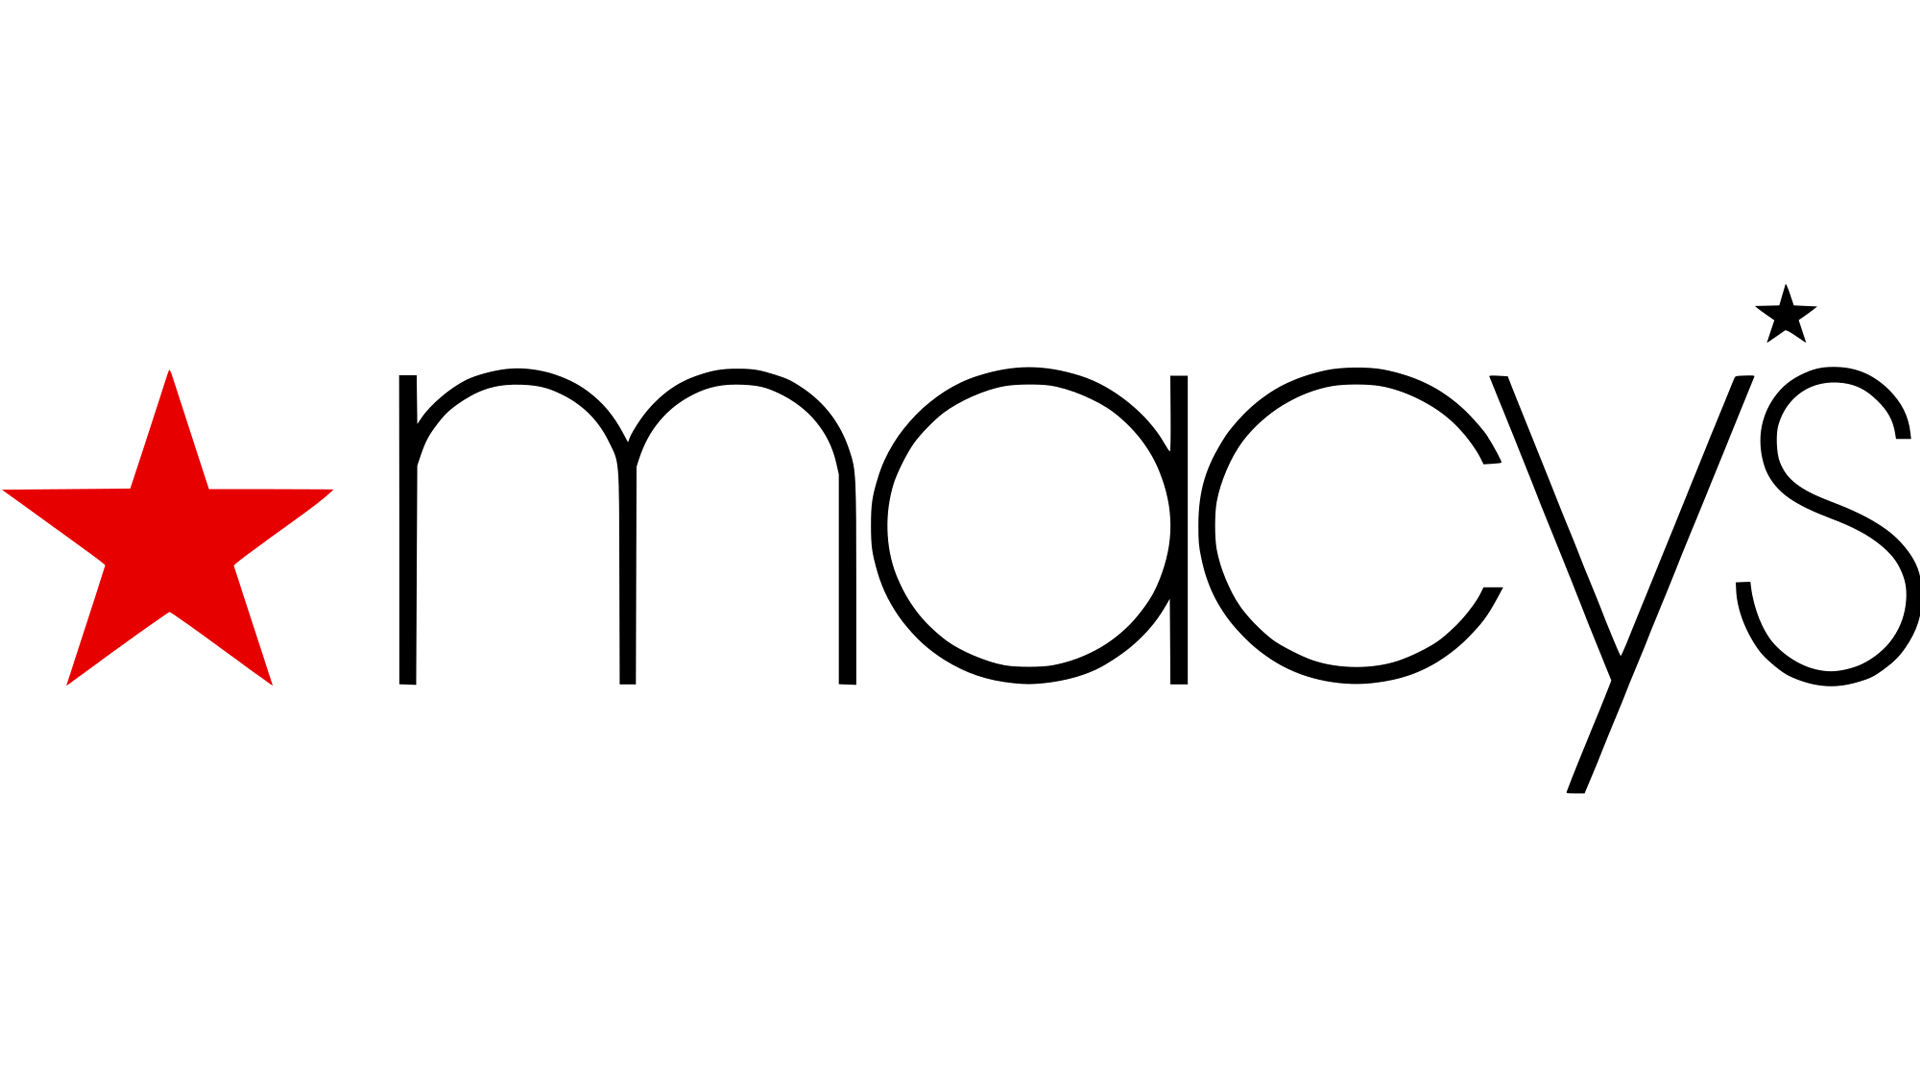 Macy's Red Star Logo - Macys Logo, Macys Symbol, Meaning, History and Evolution